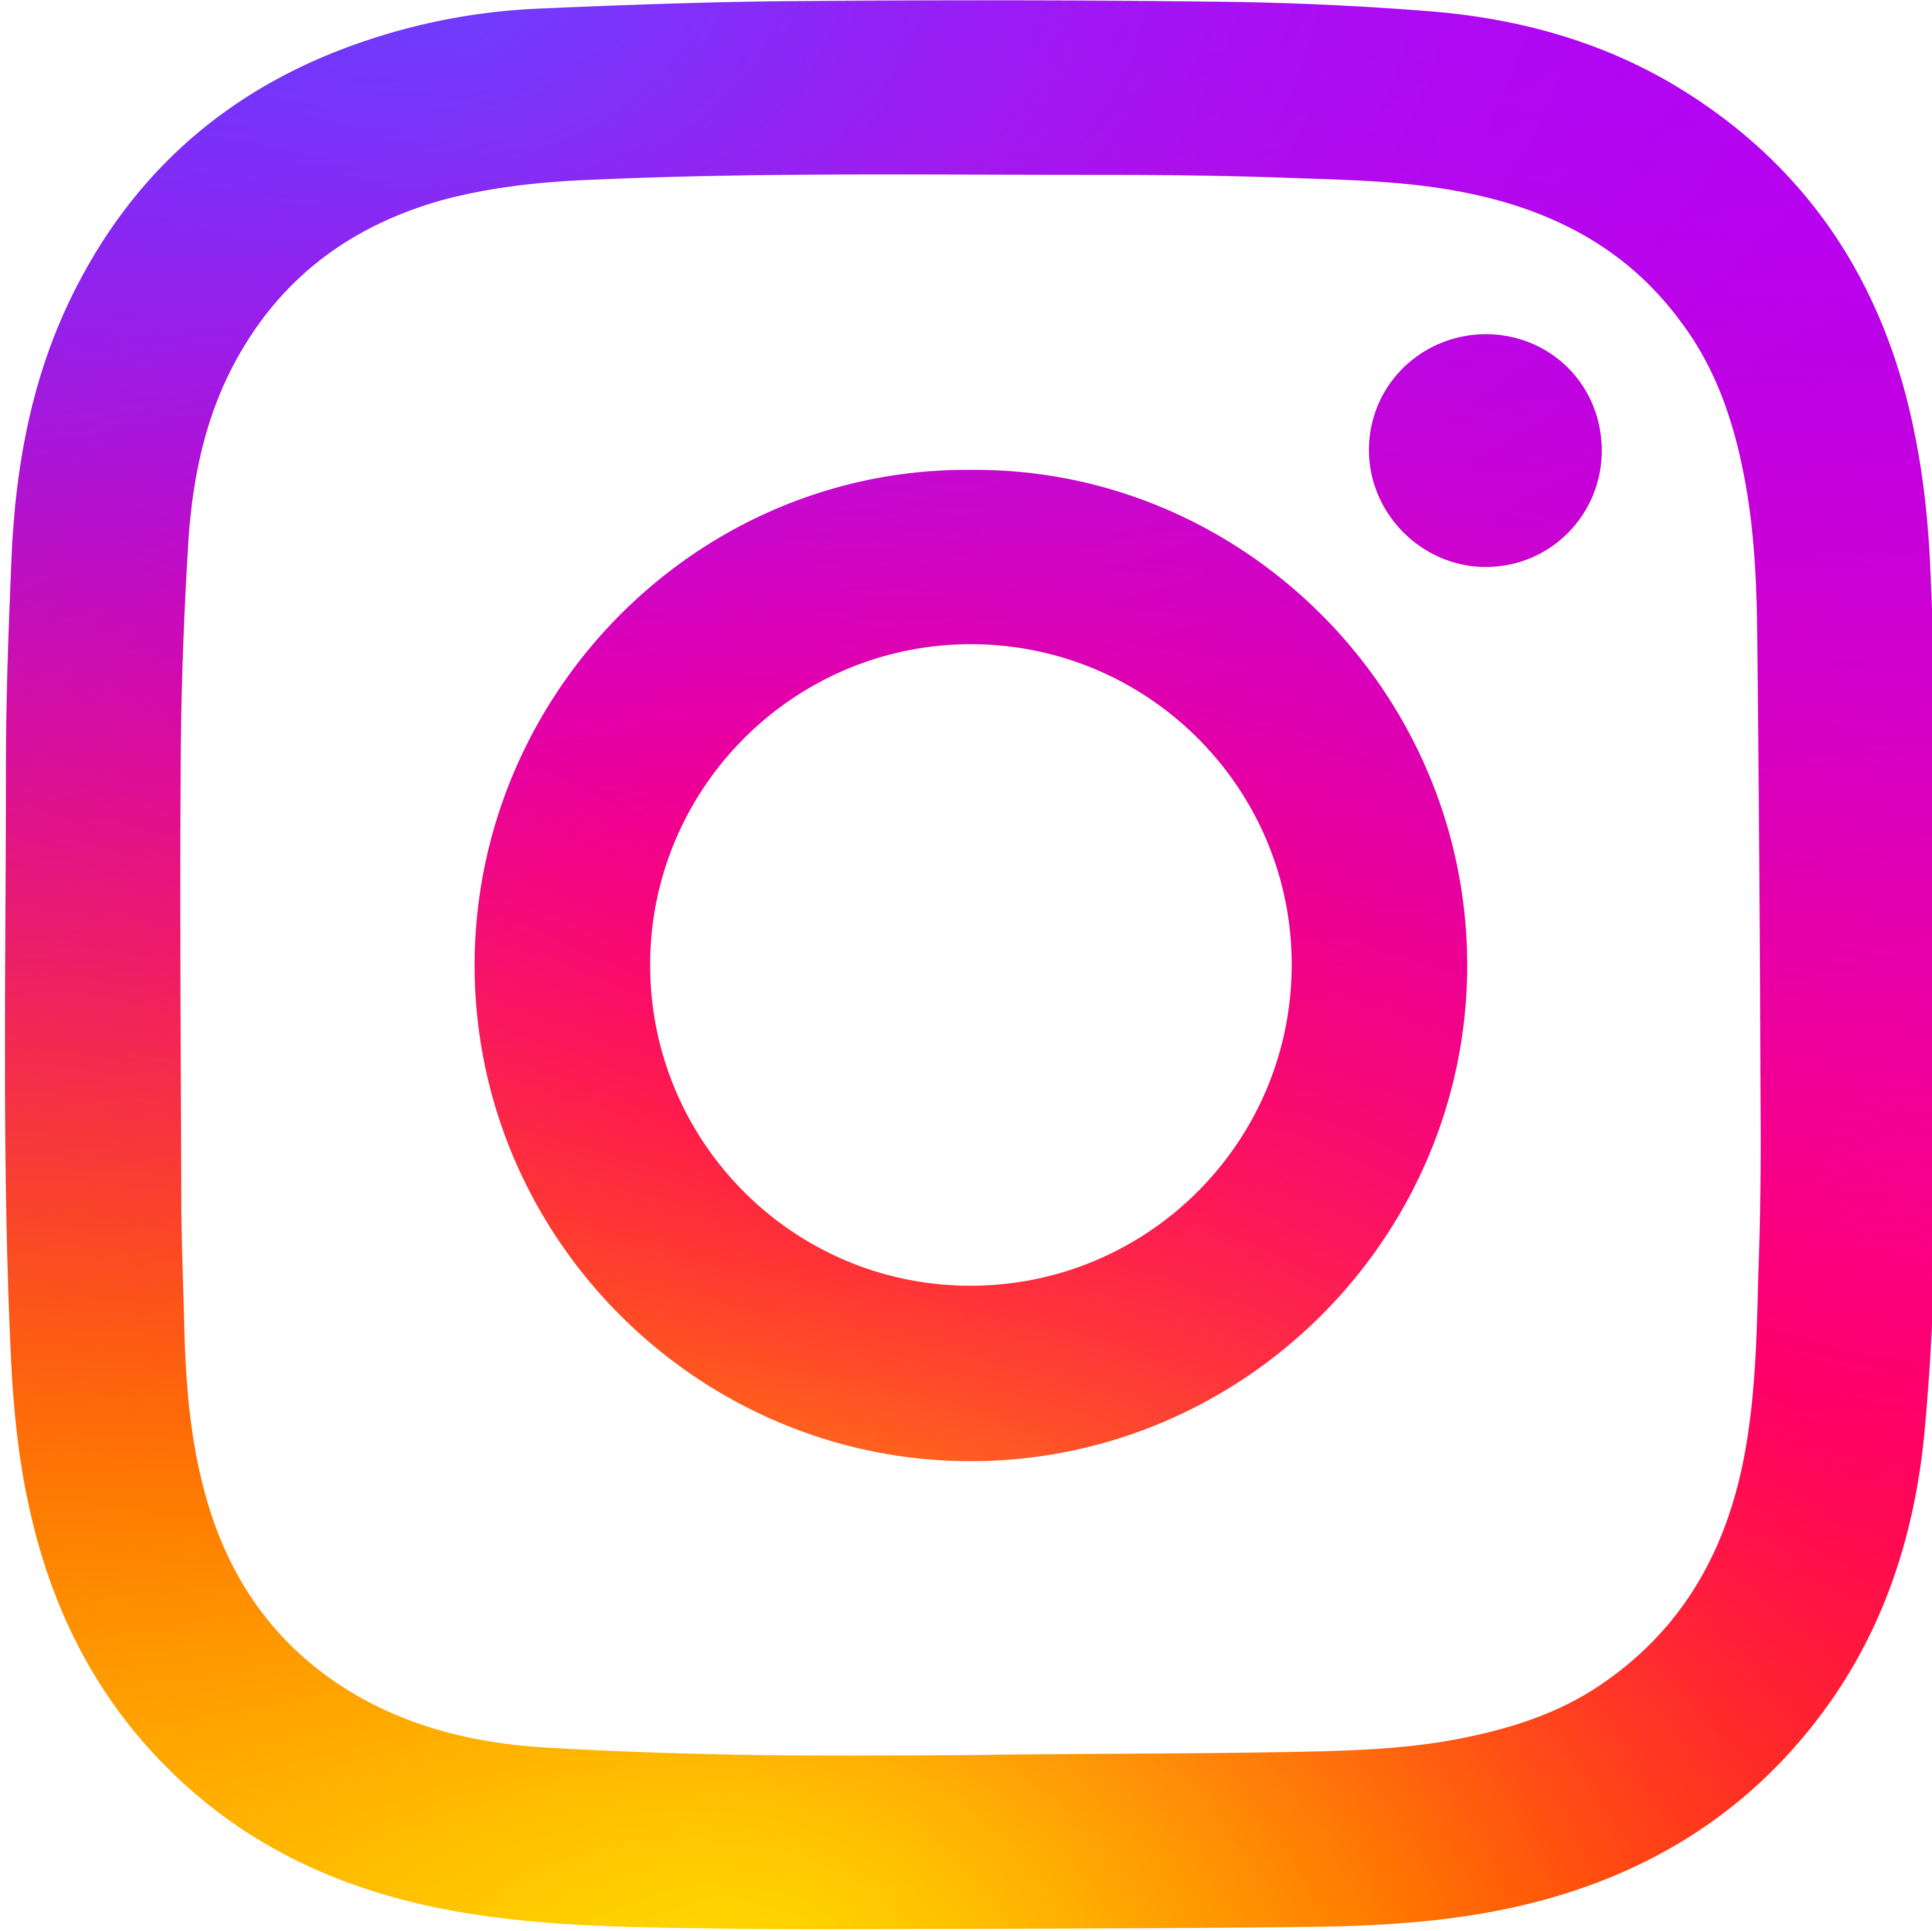 Enochs-SSD-Instagram-page